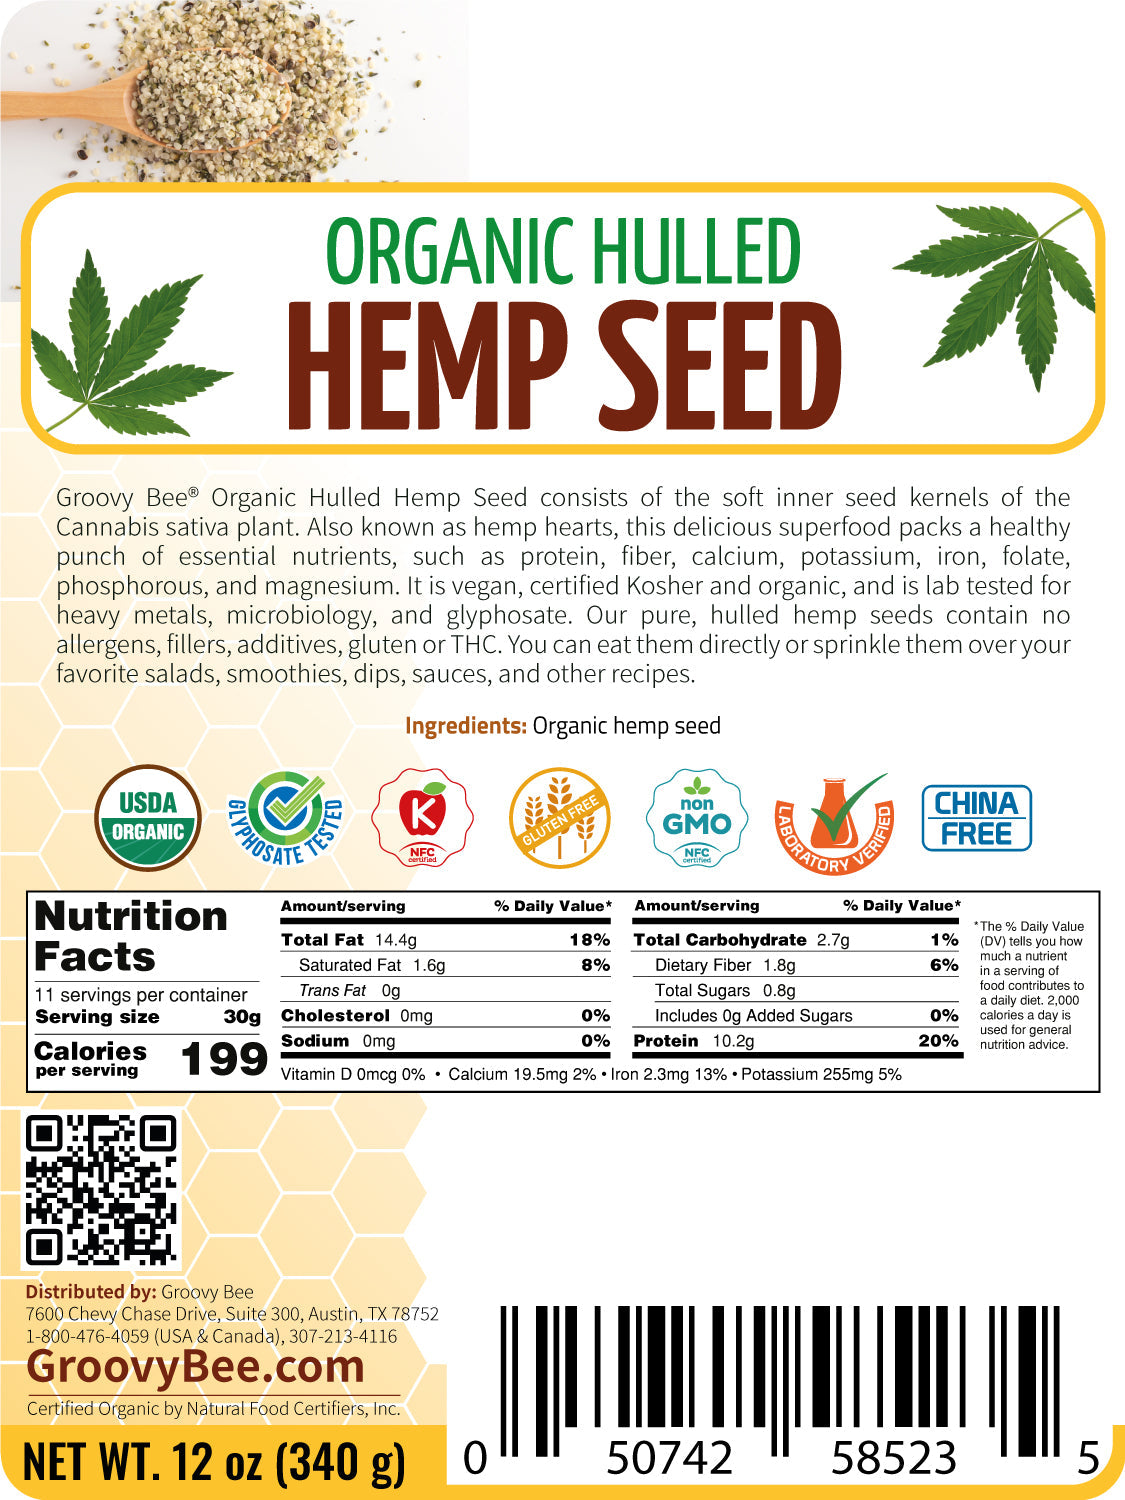 Organic Hulled Hemp Seed 12 oz (340 g) (3-Pack)